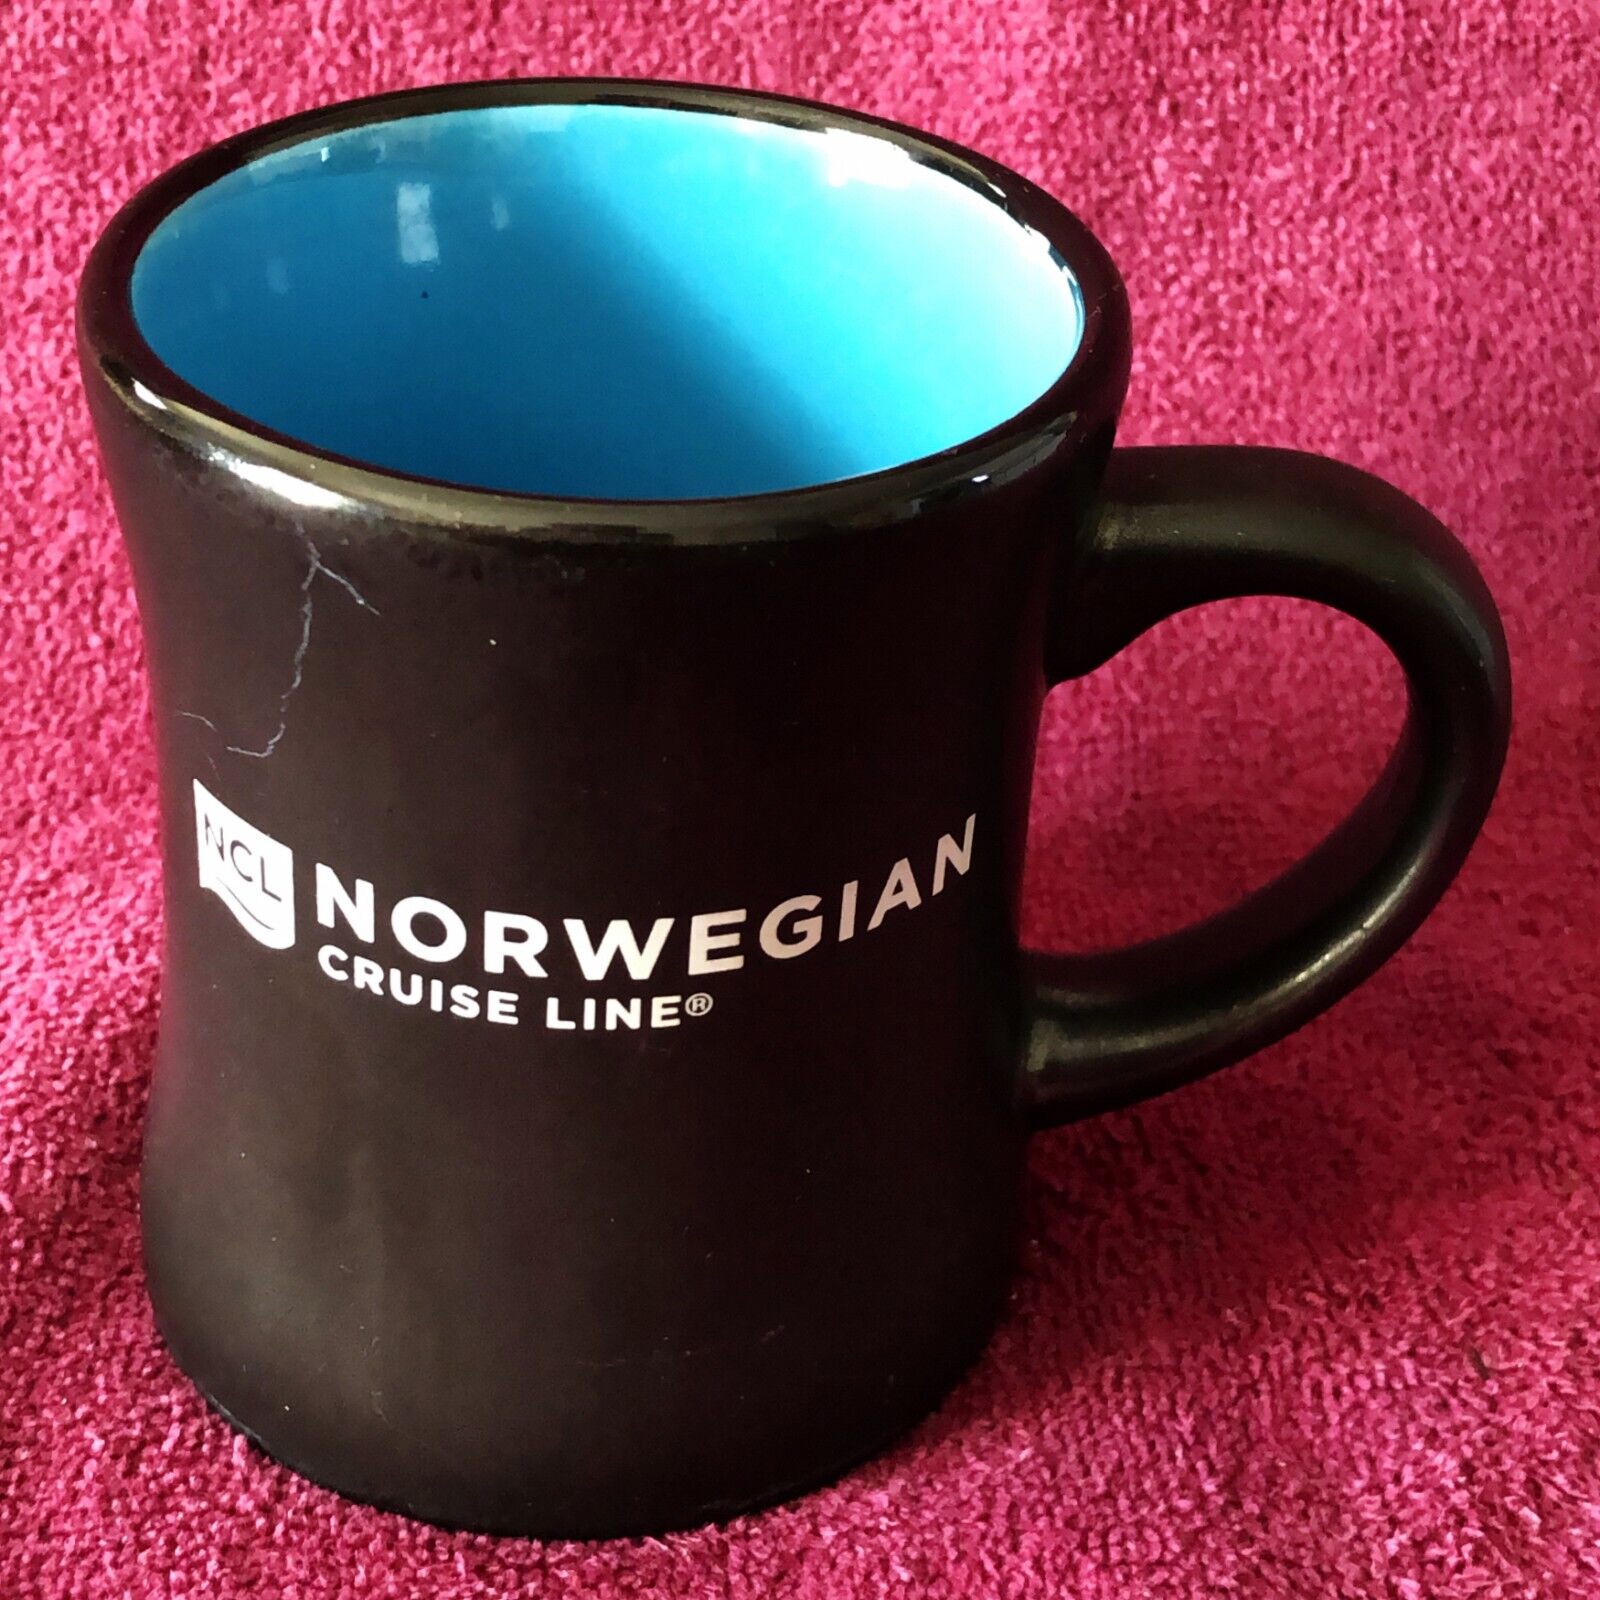 Vintage Norwegian Cruise Line Black Ceramic Coffee Mug